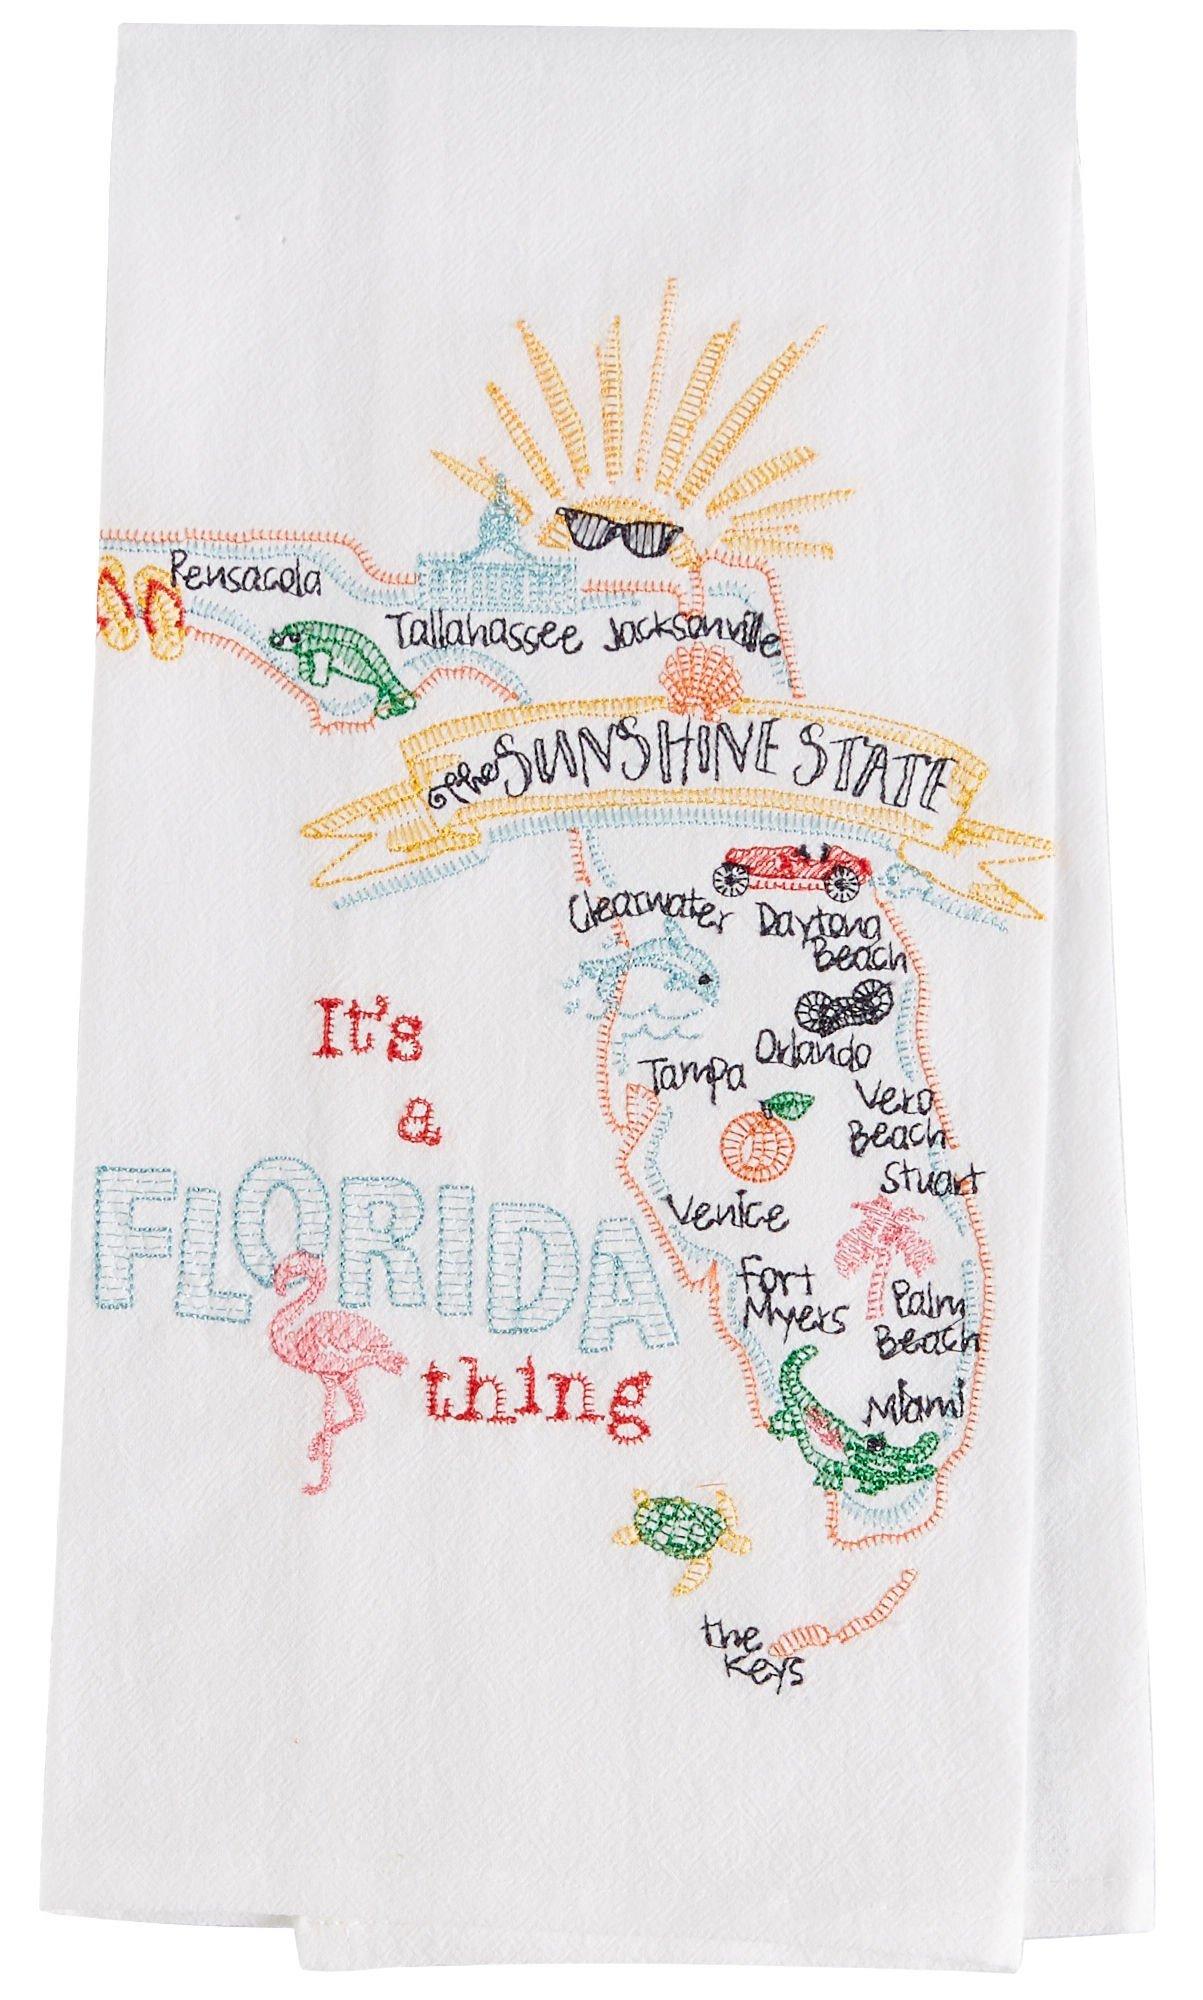 Kay Dee Designs Florida Embroidered Flour Sack Towel